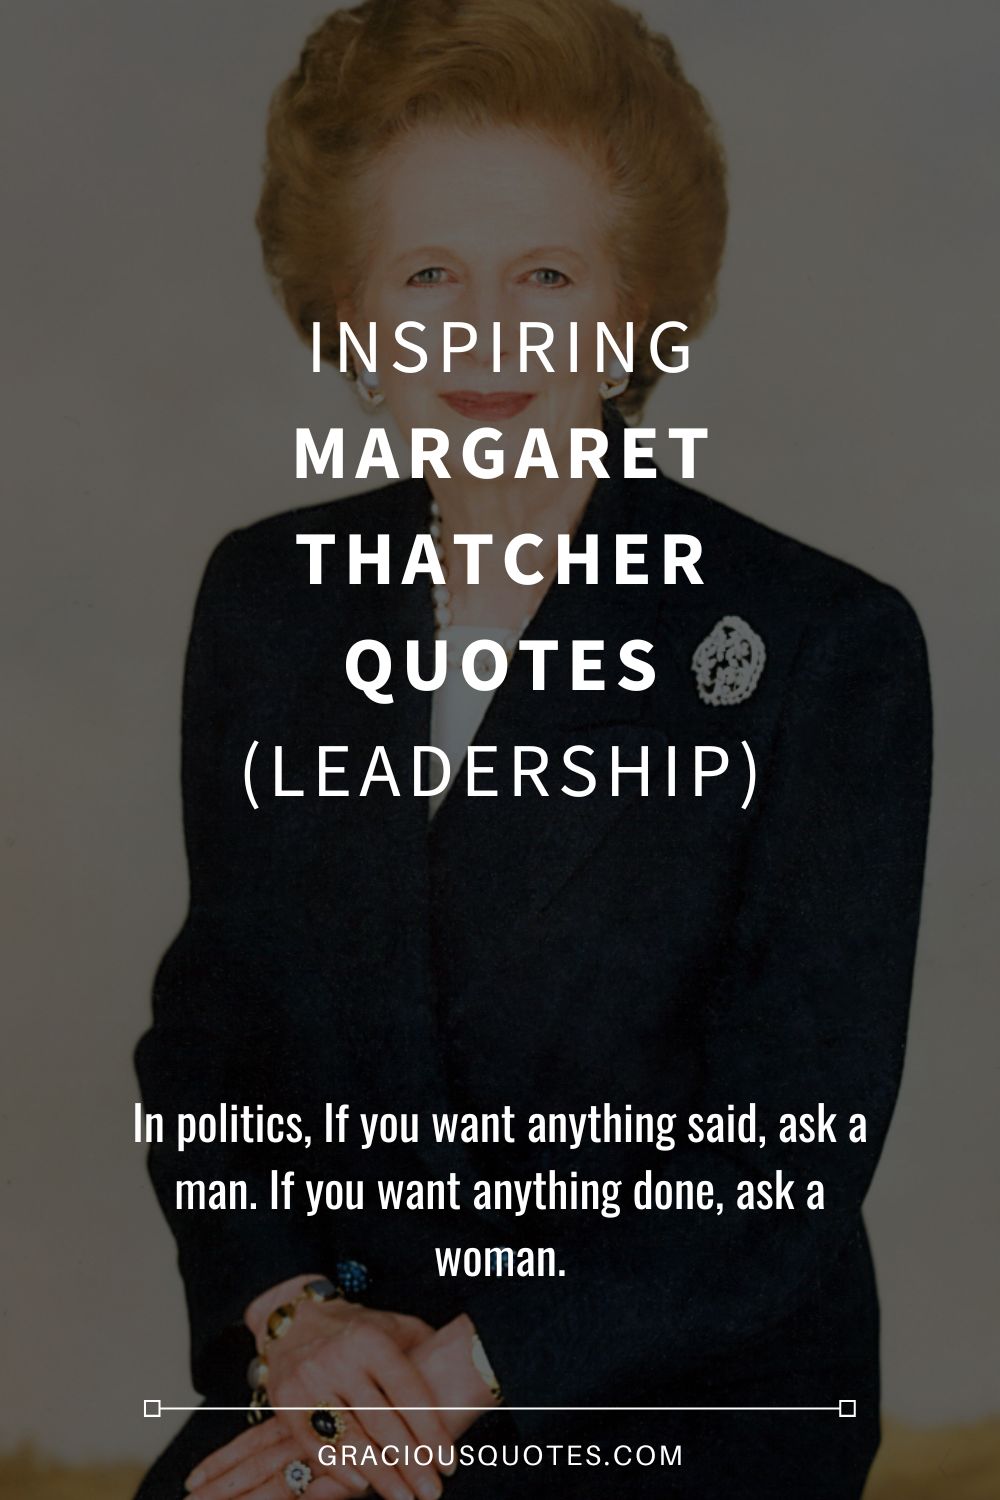 Inspiring Margaret Thatcher Quotes (LEADERSHIP) - Gracious Quotes